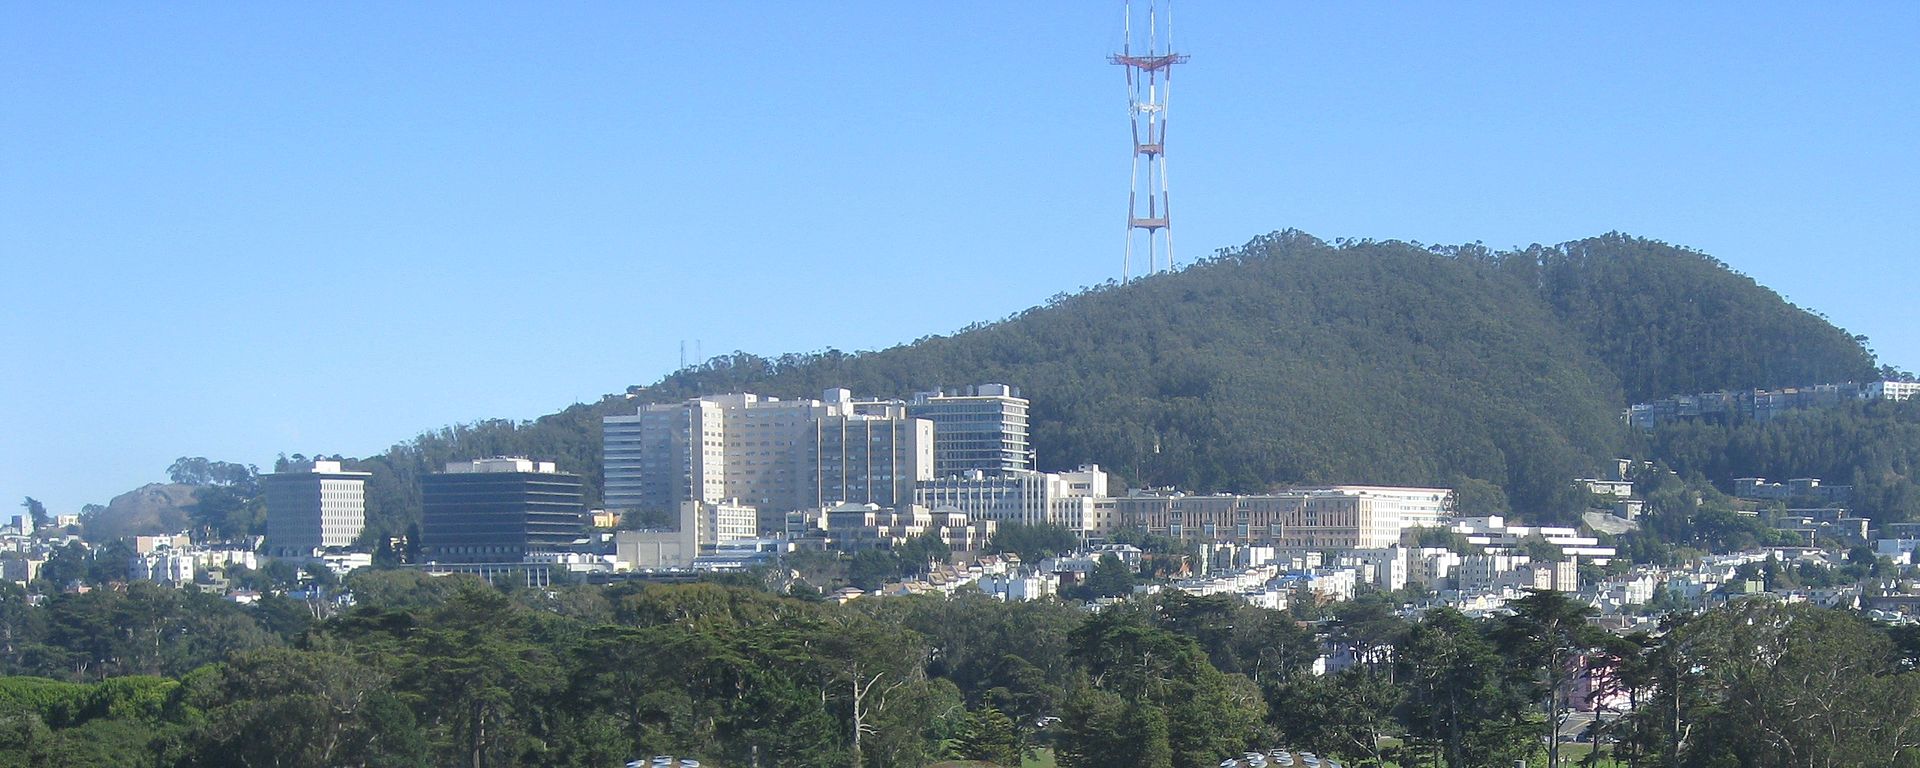 Parnassus Location of UCSF Medical Center